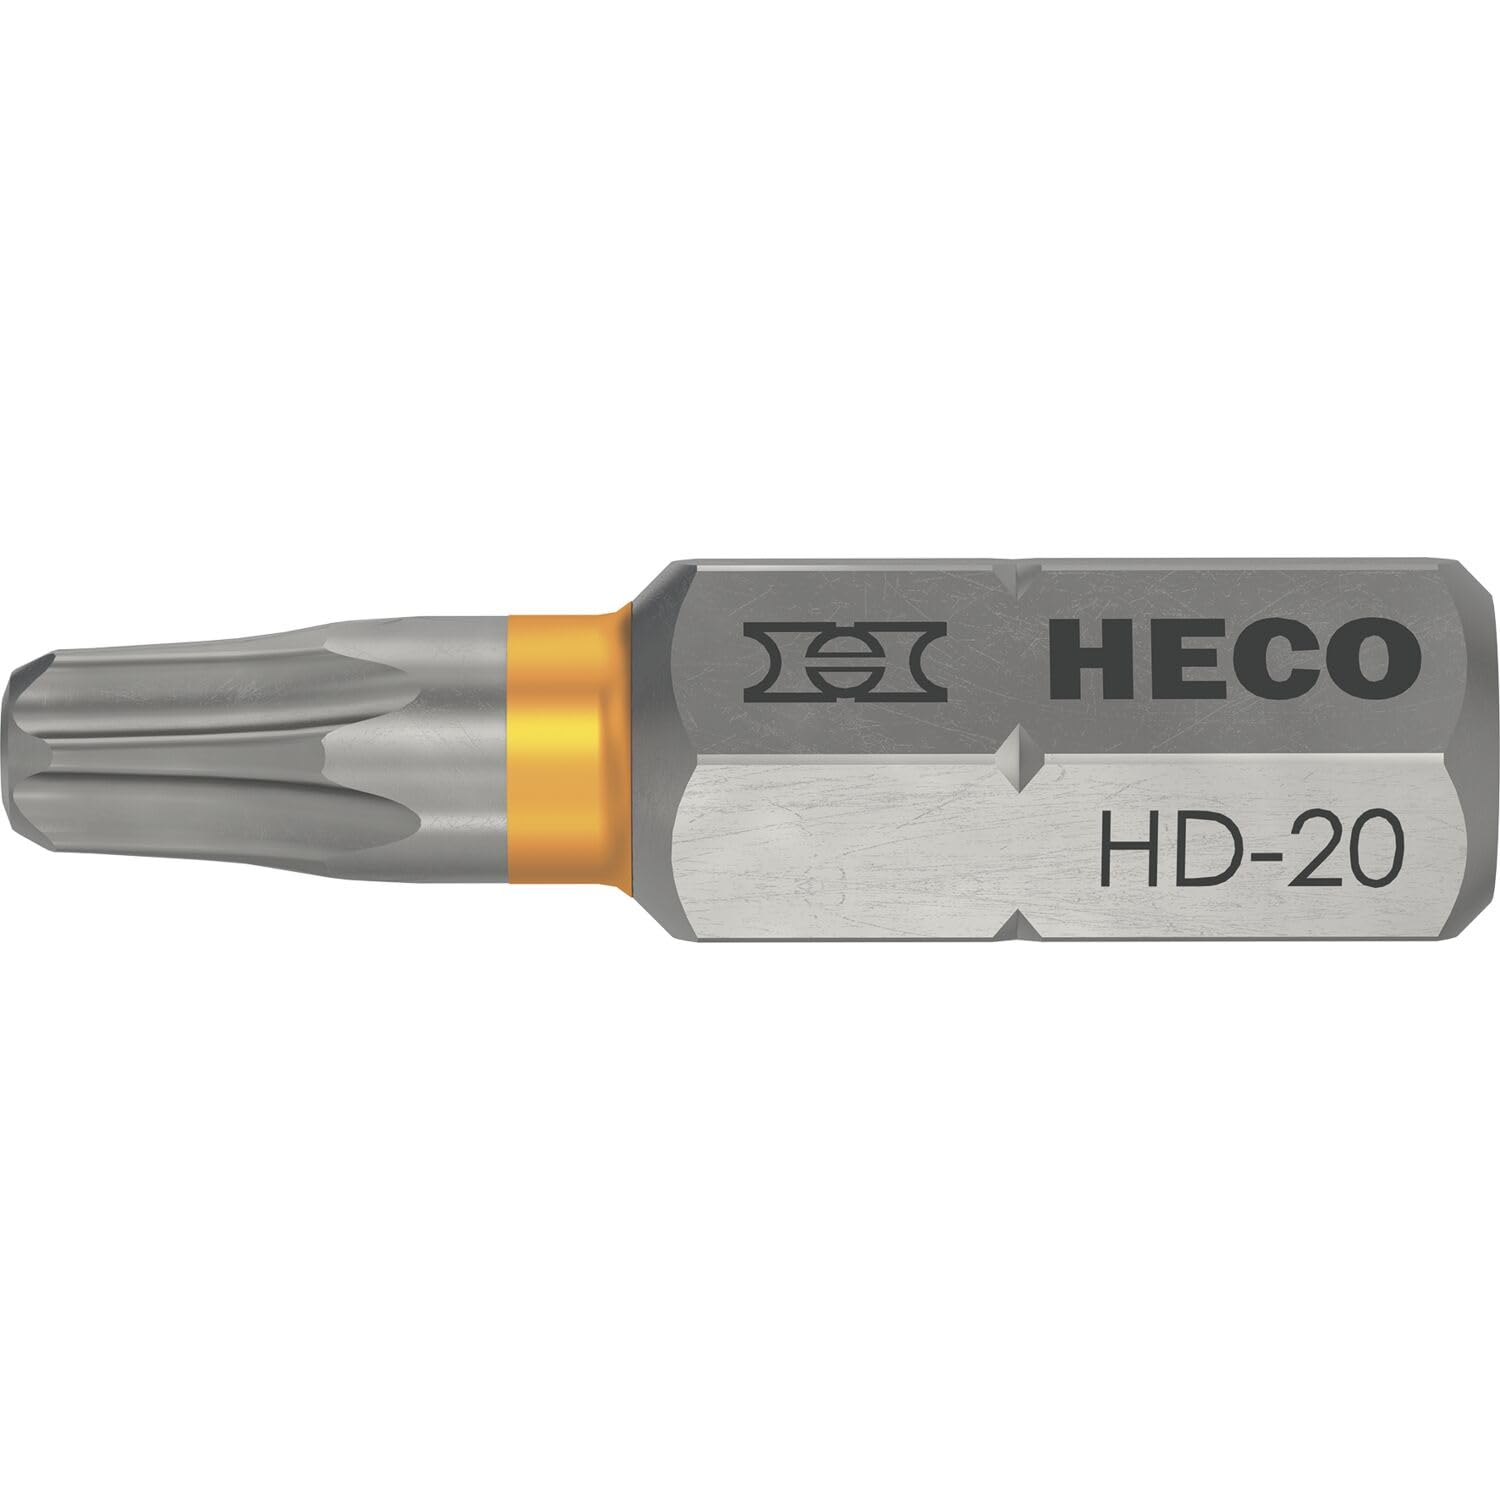 Bits, HECO-Drive, HD-20, Farbring: orange, im Blister à 10 Stück HD-20